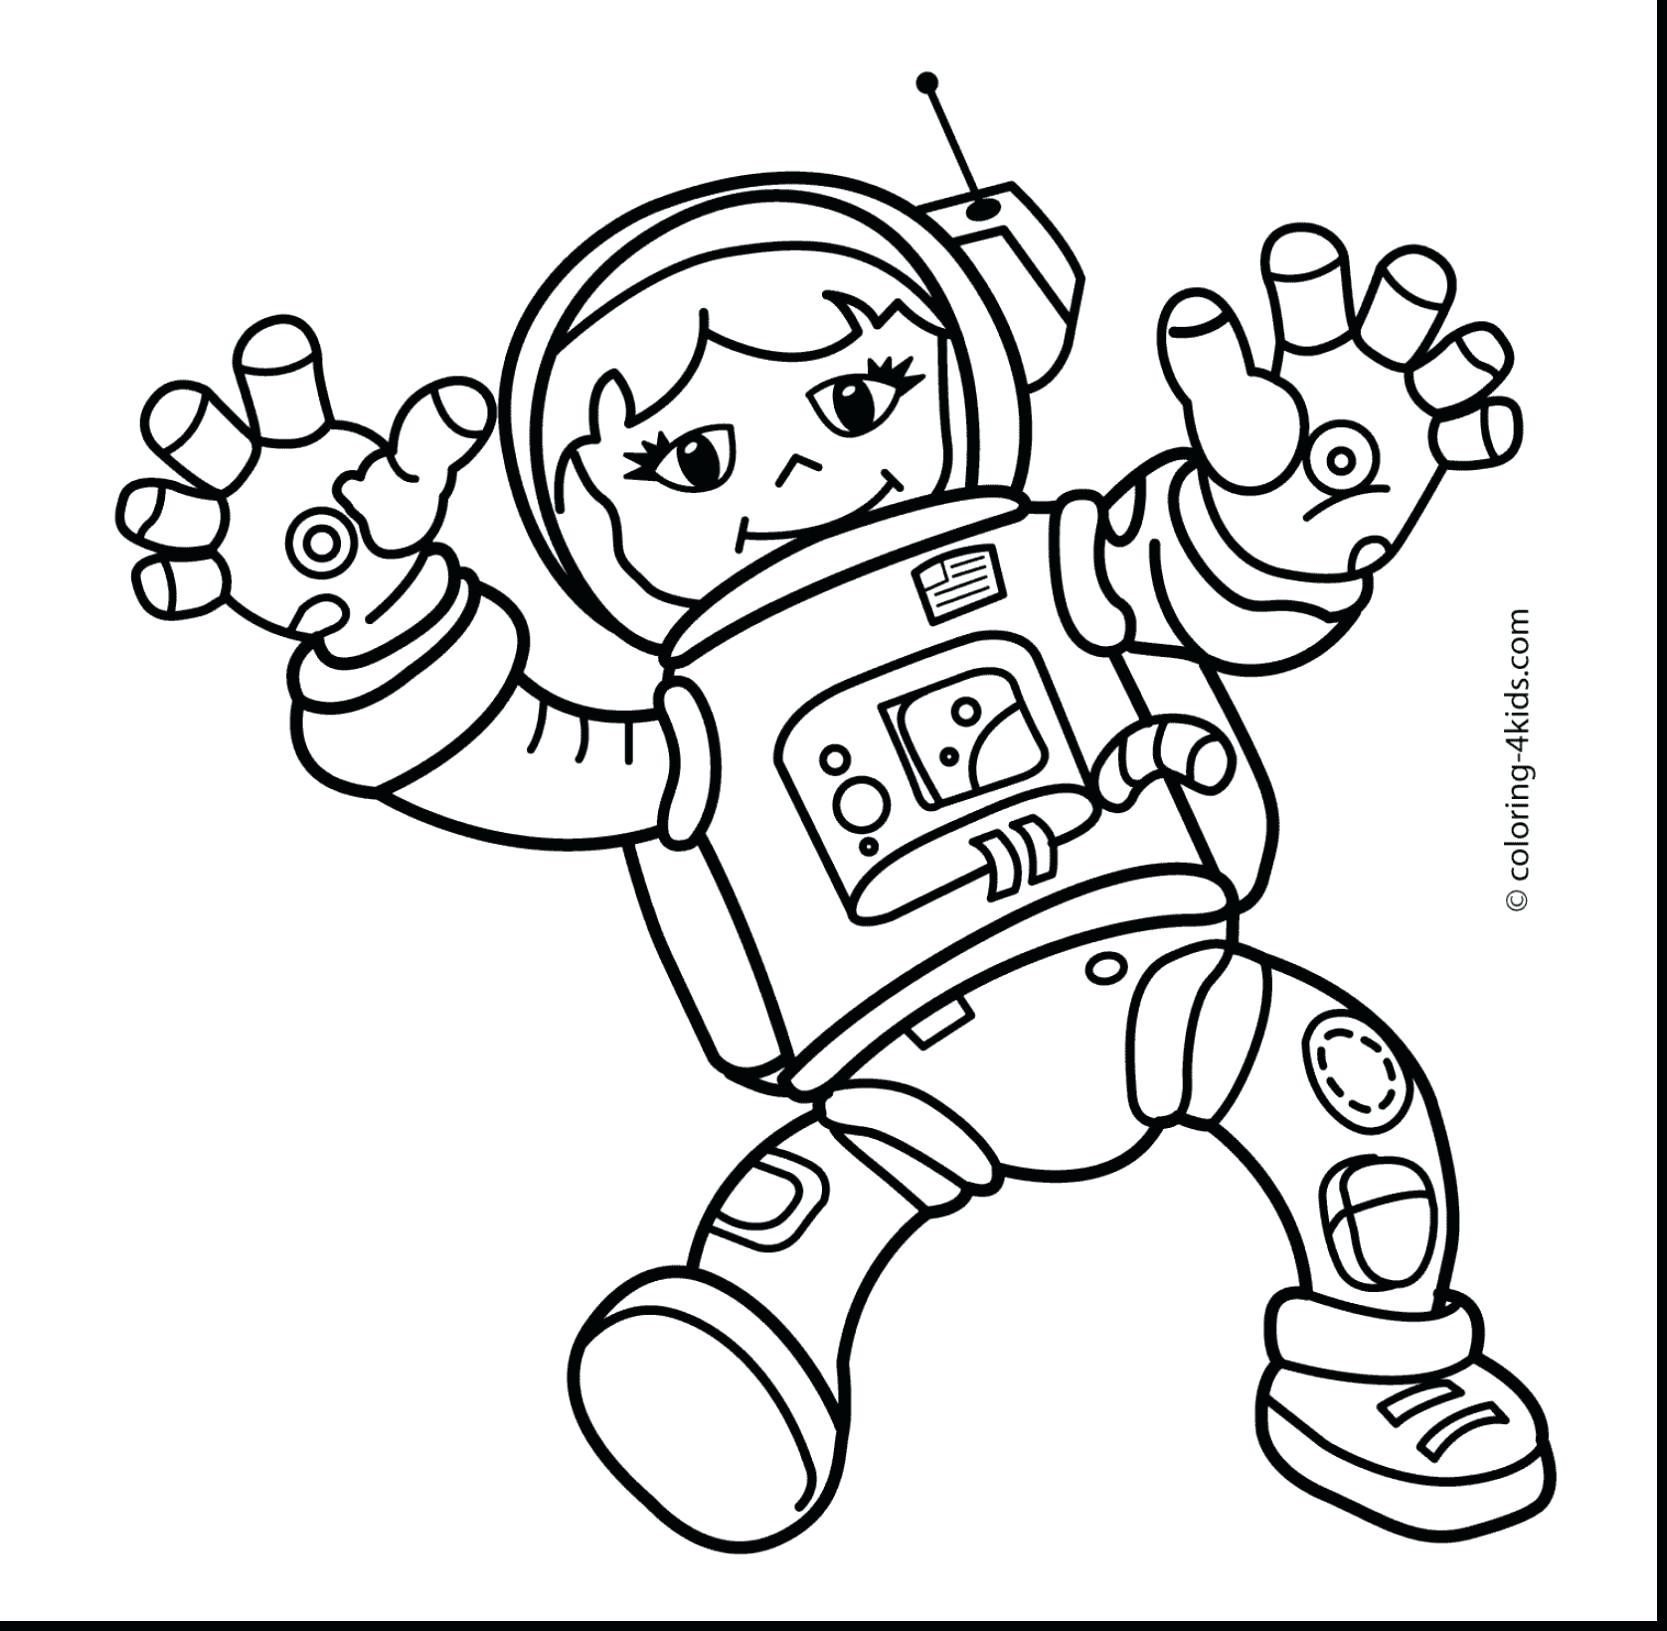 Скафандр раскраска. Космонавт раскраска. Космонавт раскраска для детей. Раскраска космонавт в космосе.